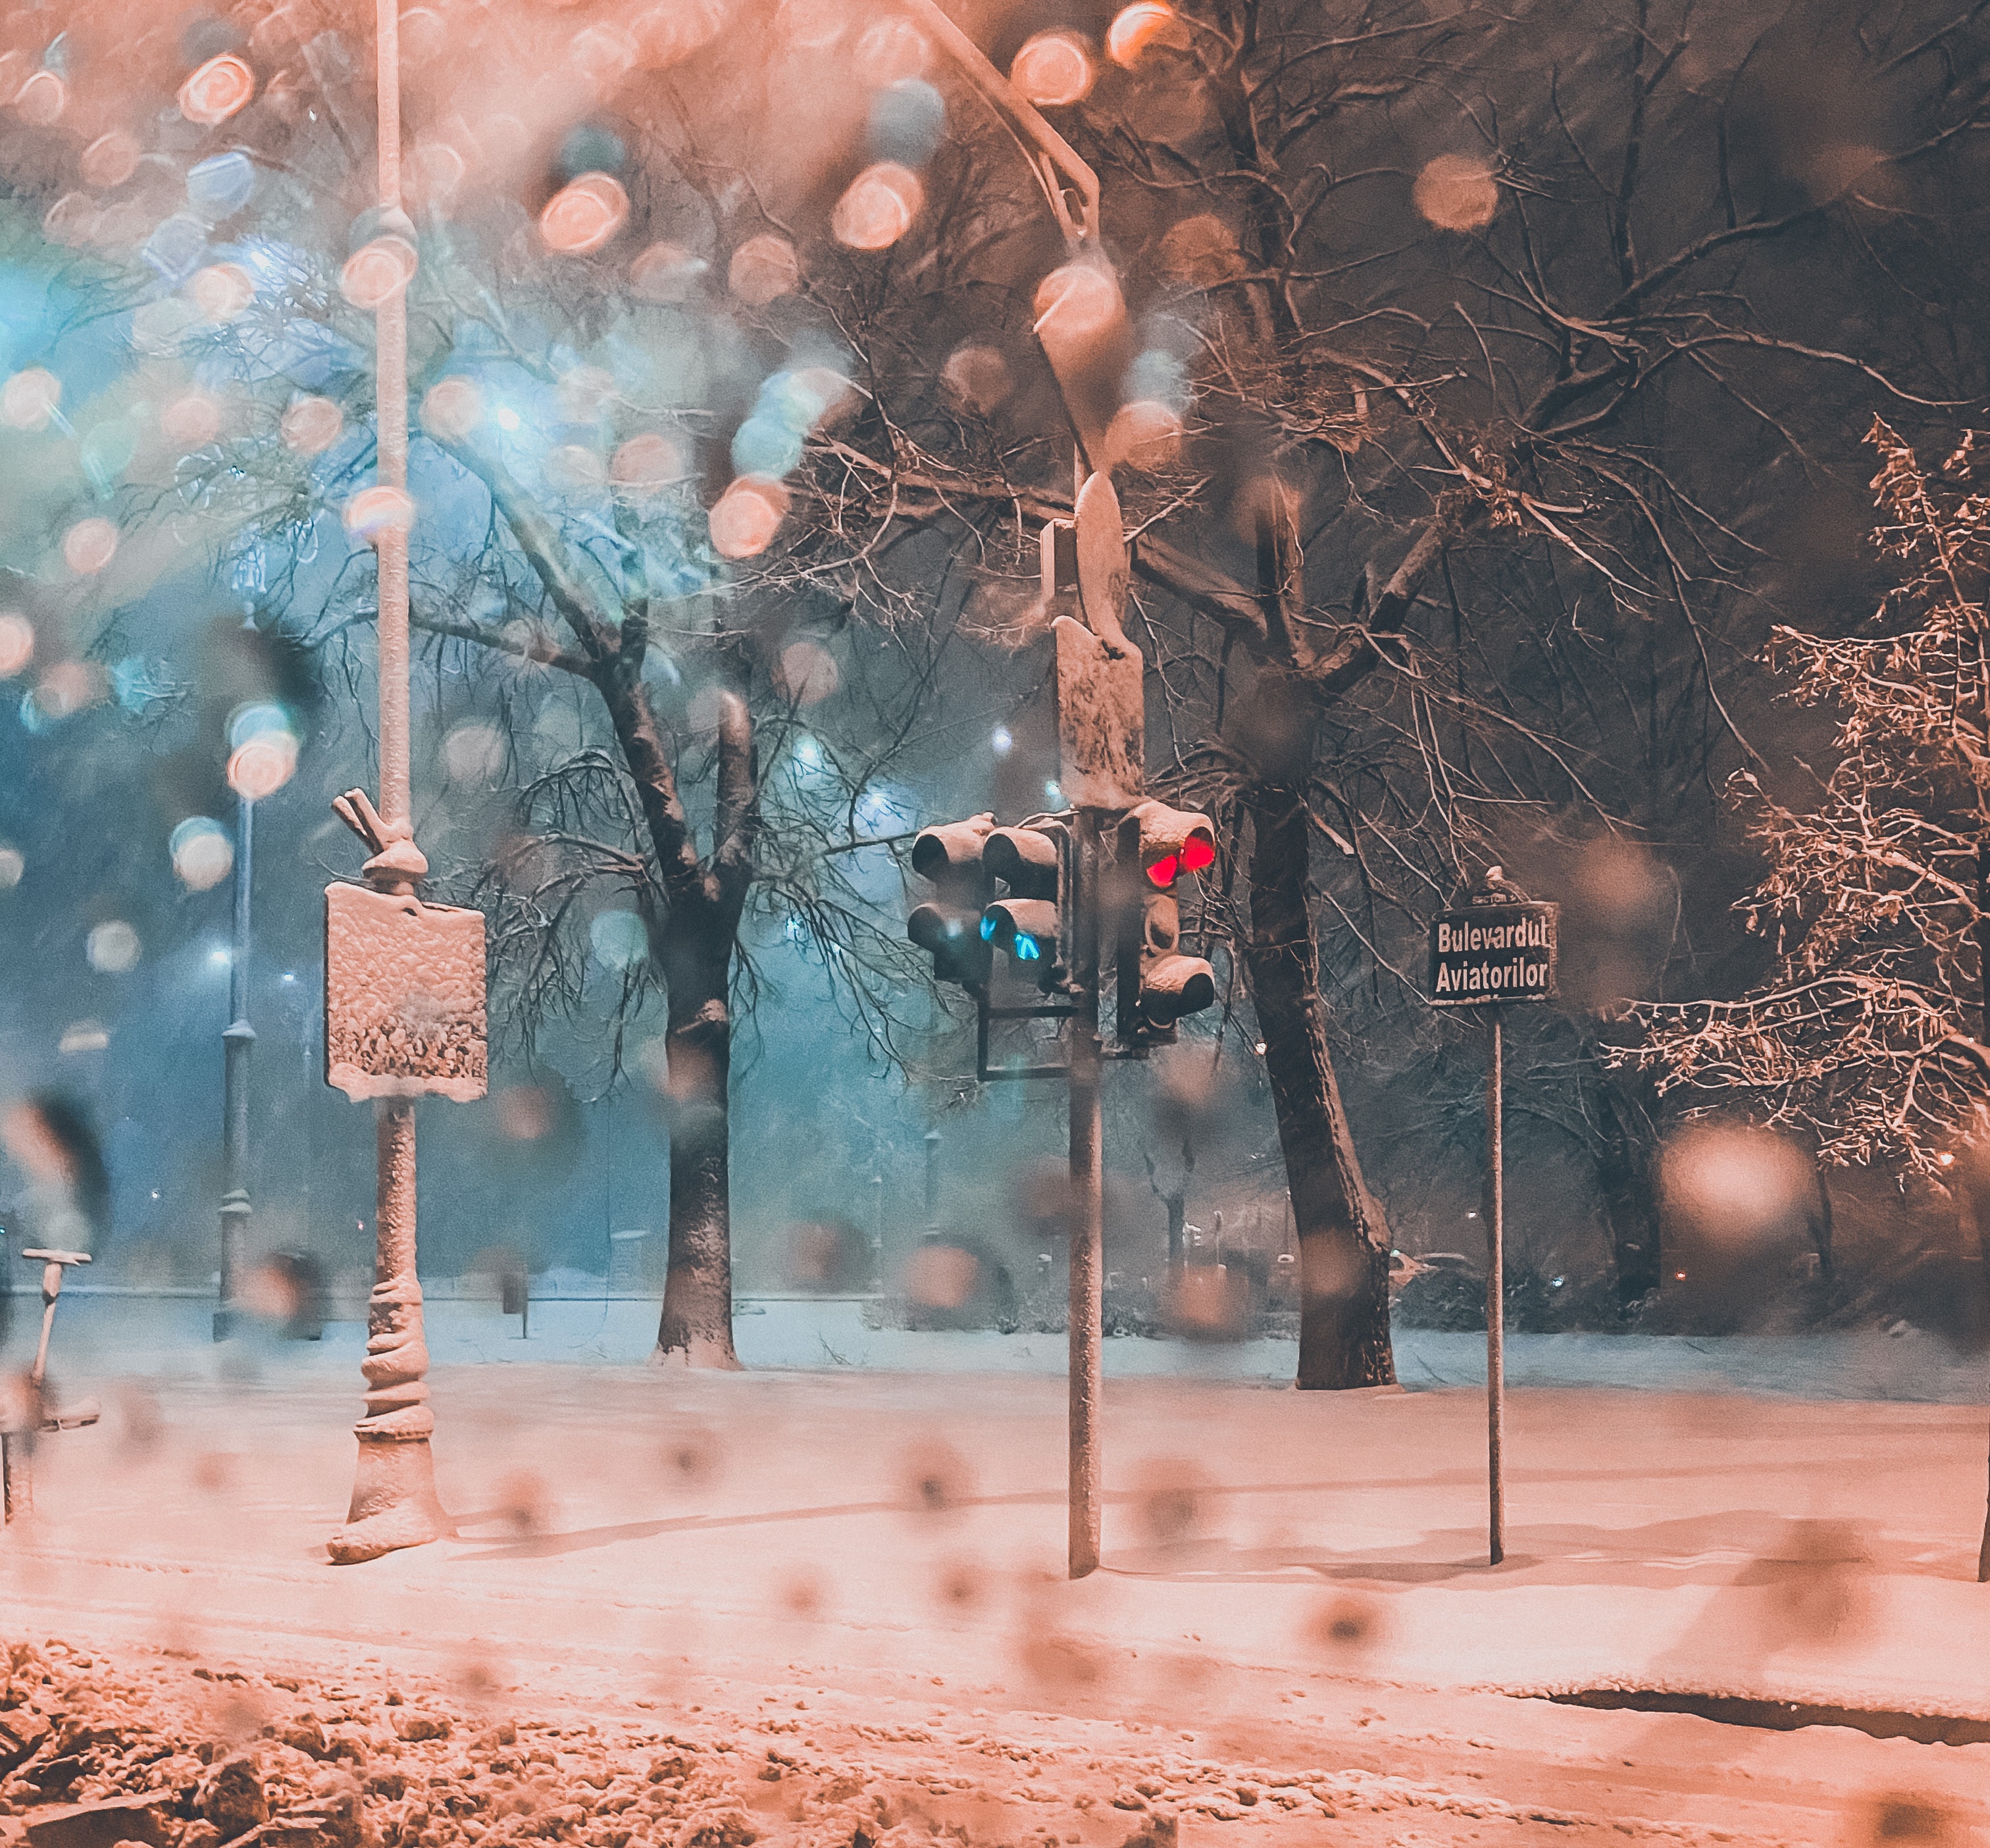 Free HD traffic light, winter, snow, miscellanea, miscellaneous, street, snowstorm